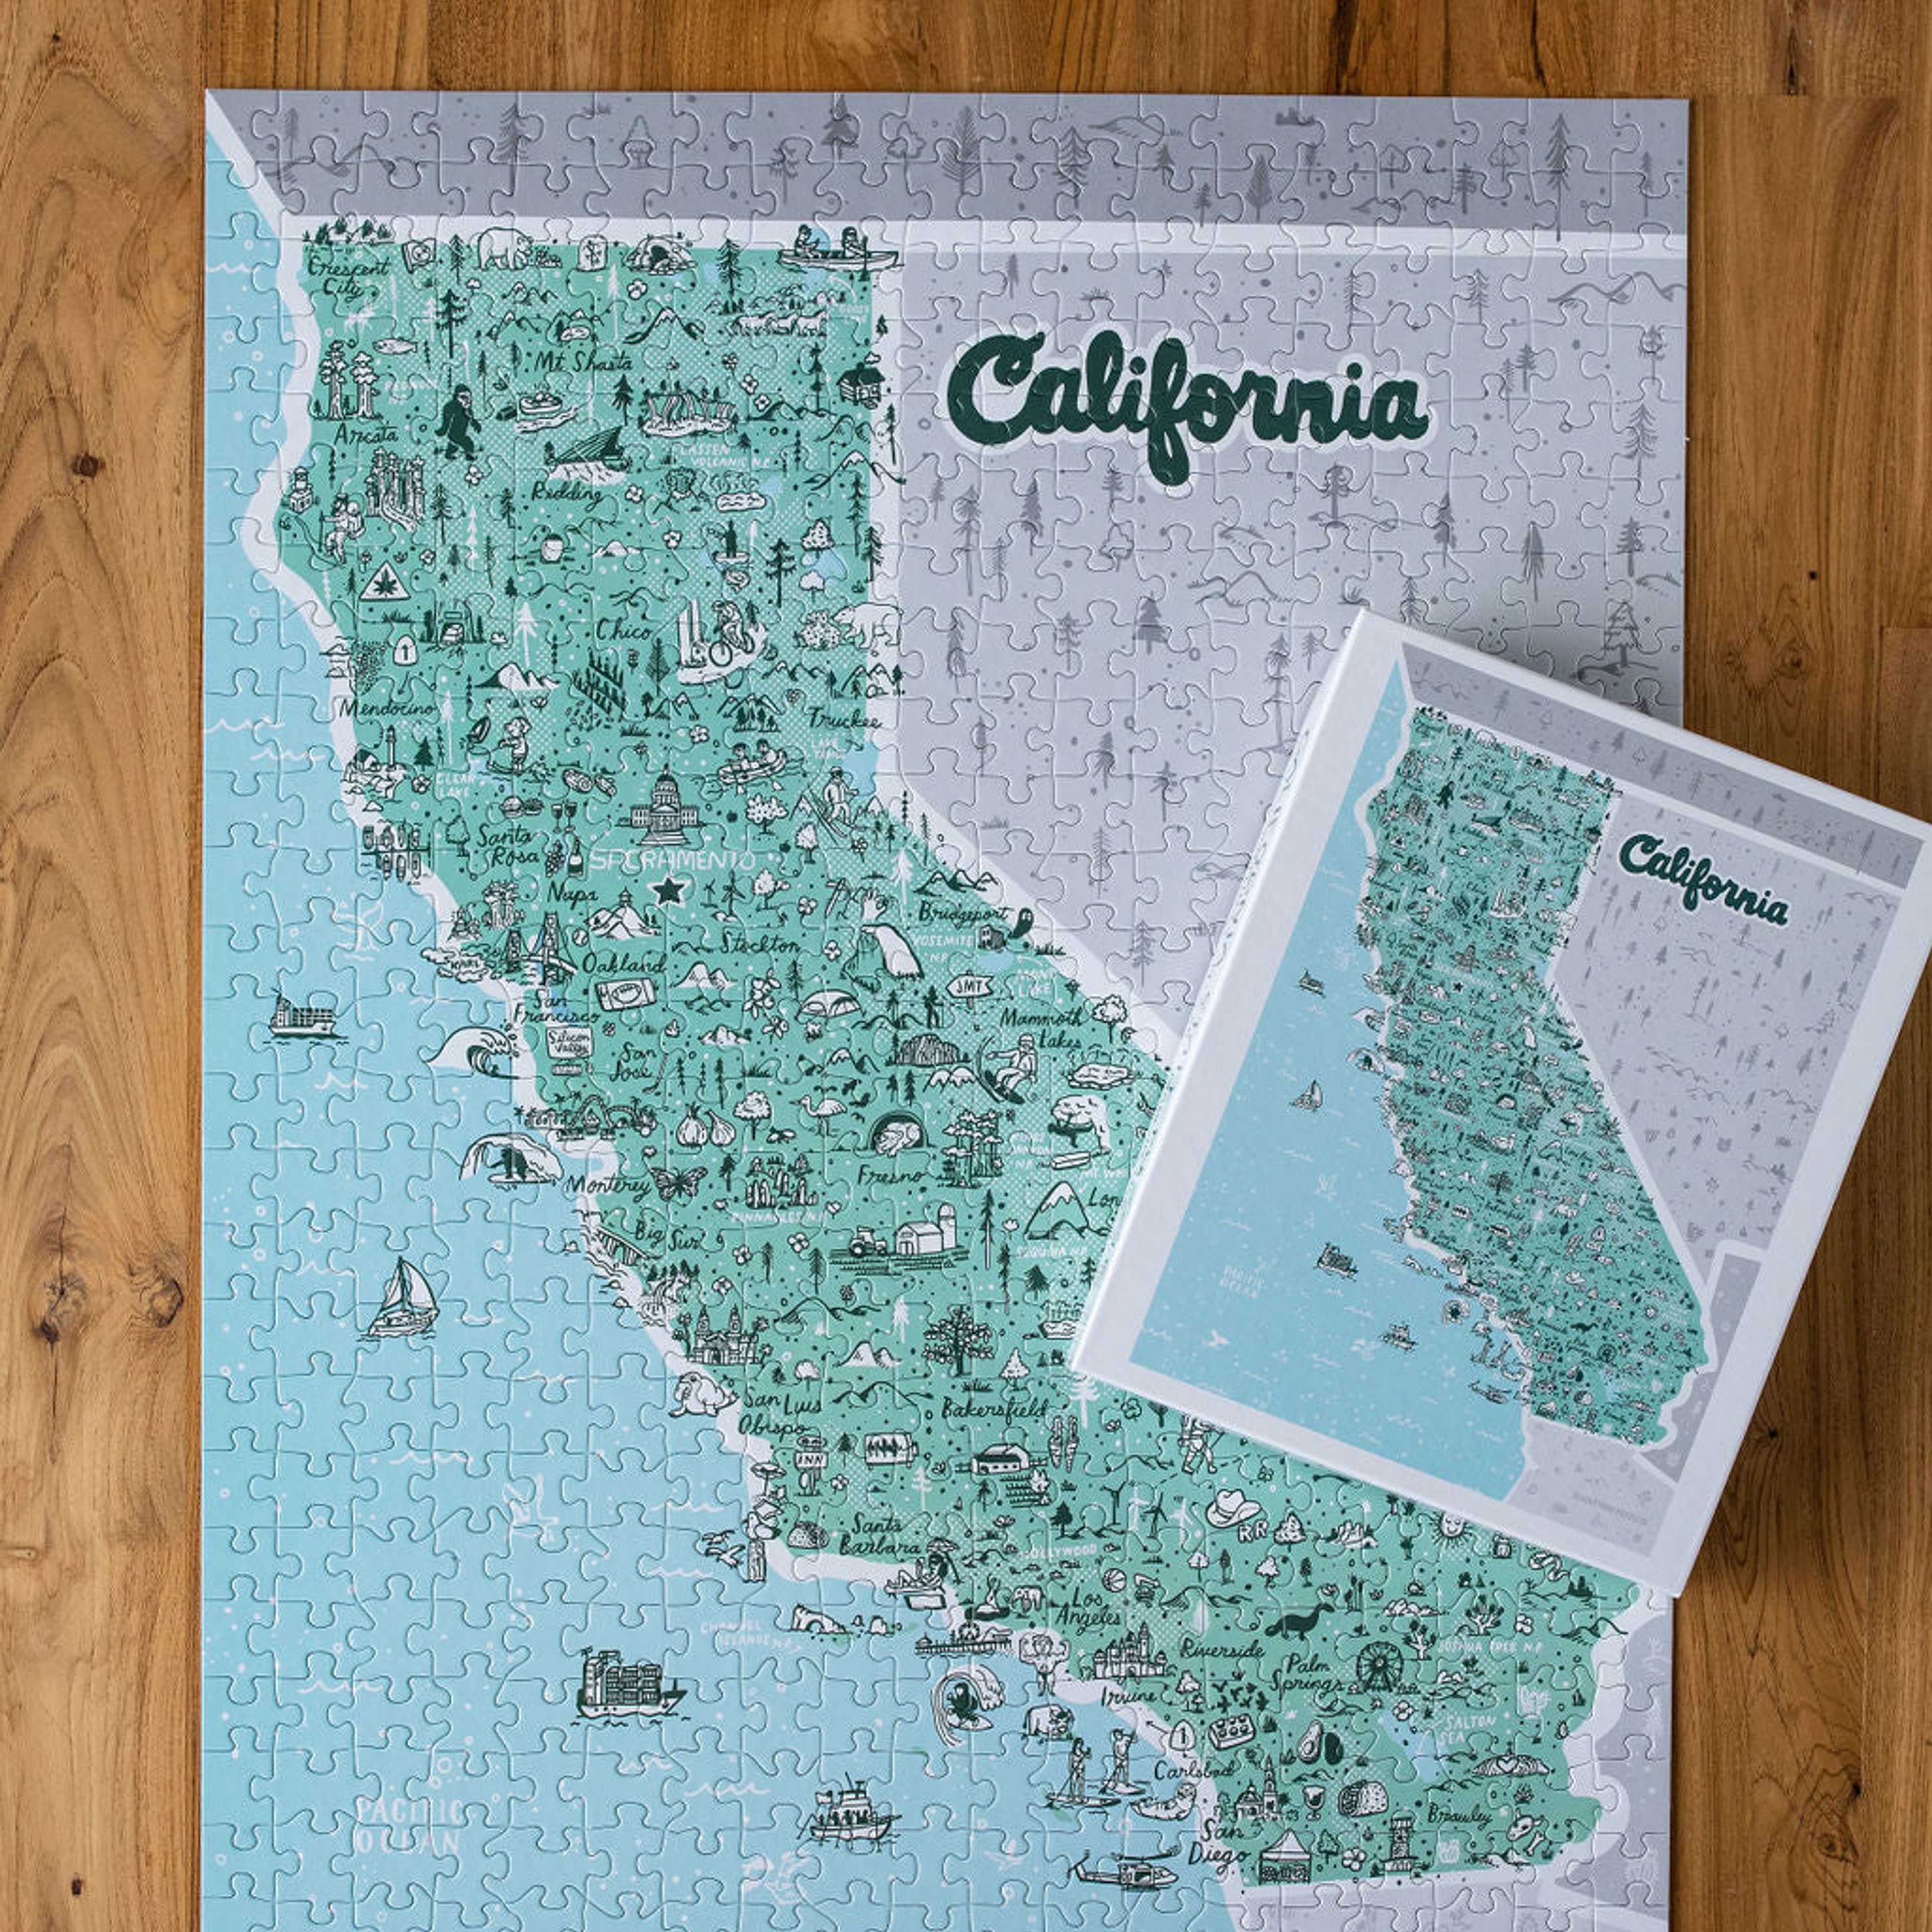 State of California Puzzle